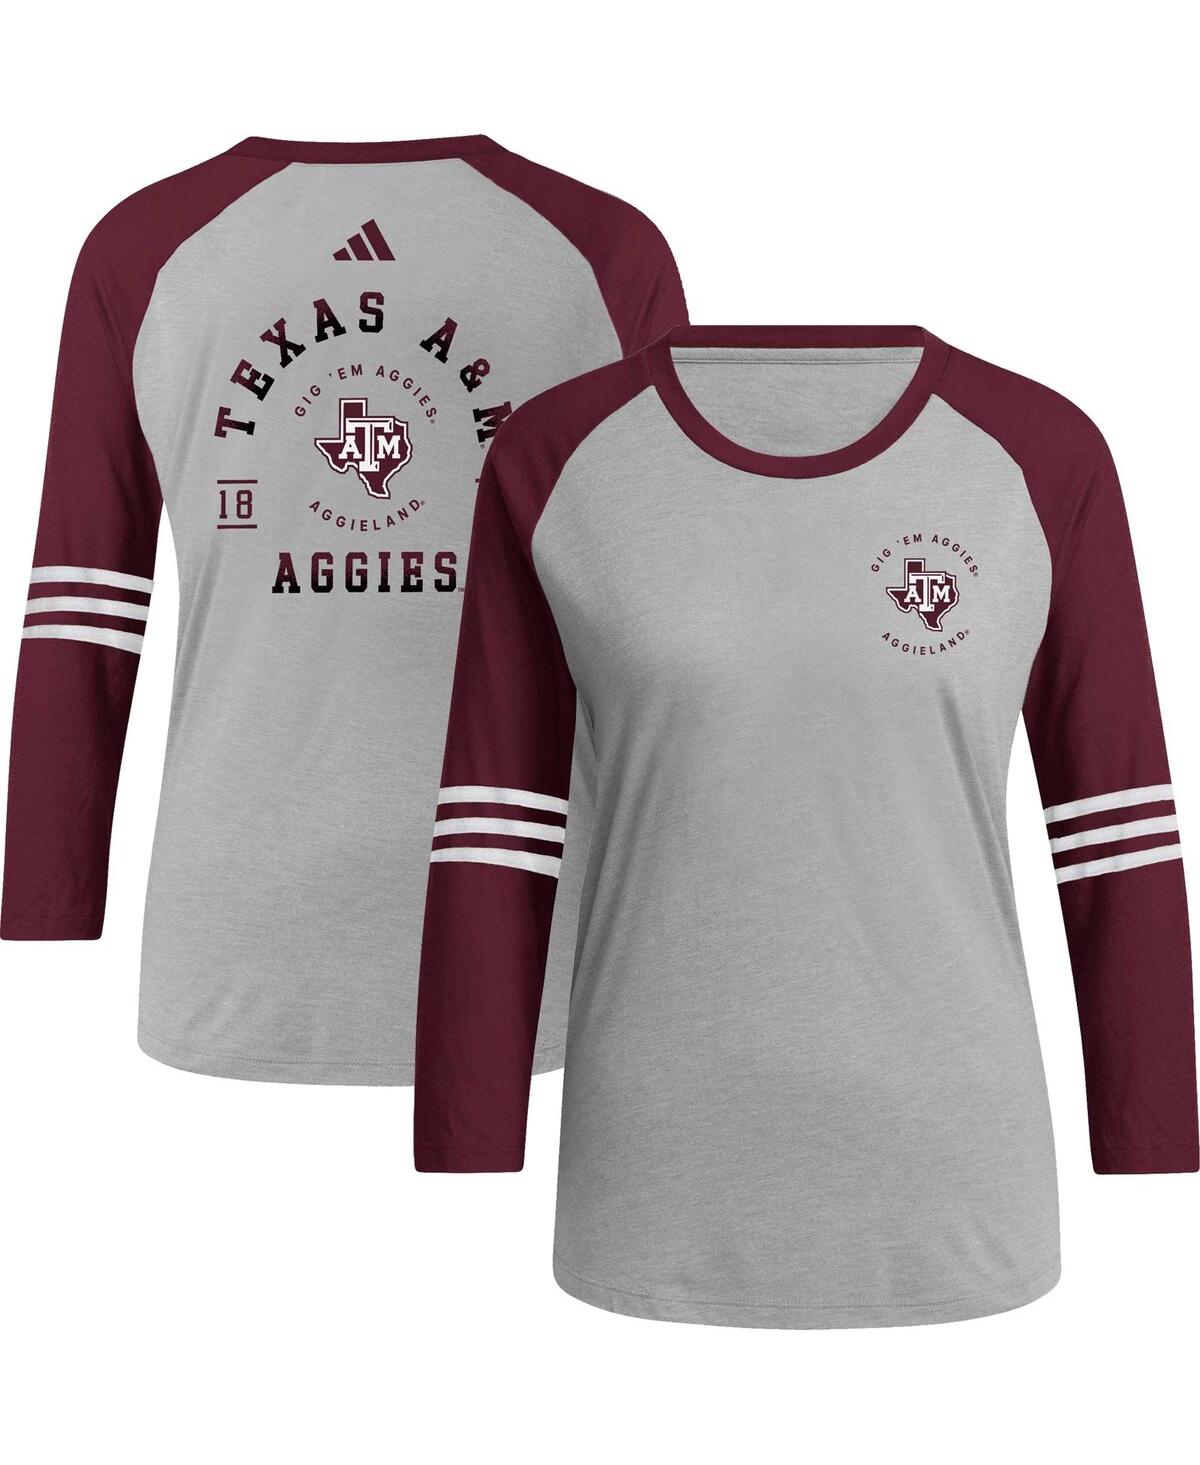 Women's adidas Gray Texas A&M Aggies Baseball Raglan 3/4-Sleeve T-shirt - Gray